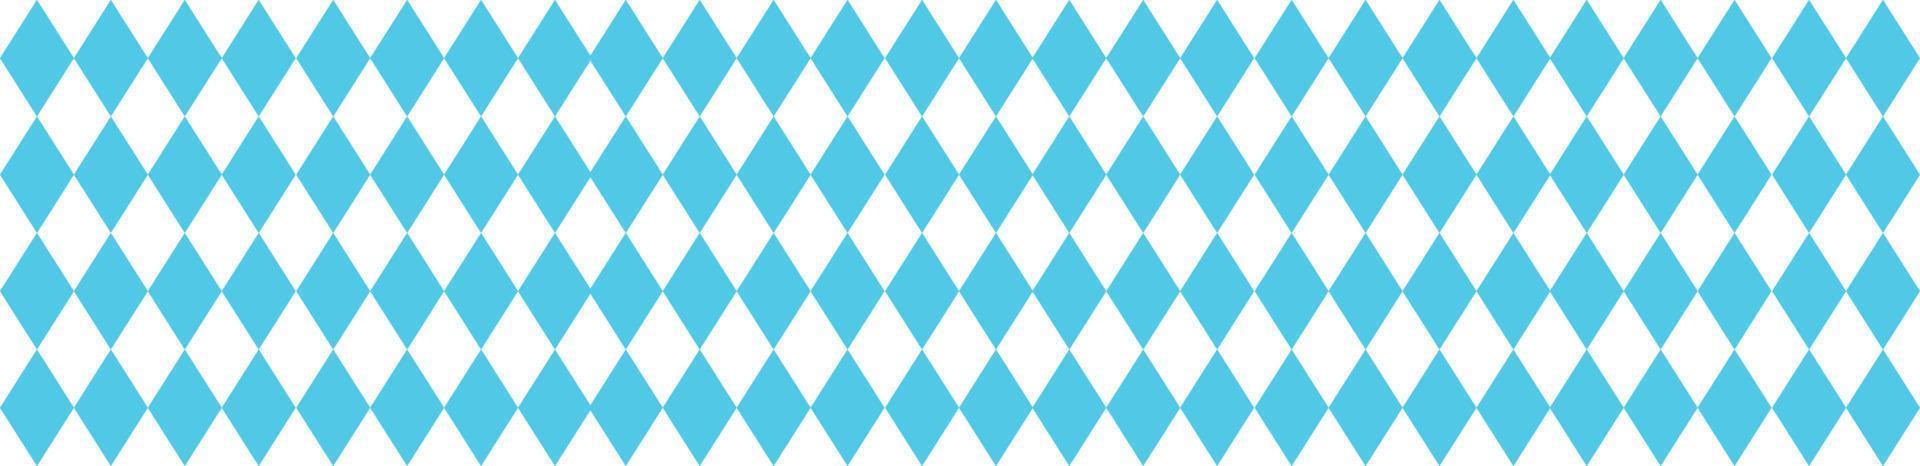 bavarian pattern for oktoberfest. german blue rhombus texture. Vector illustration